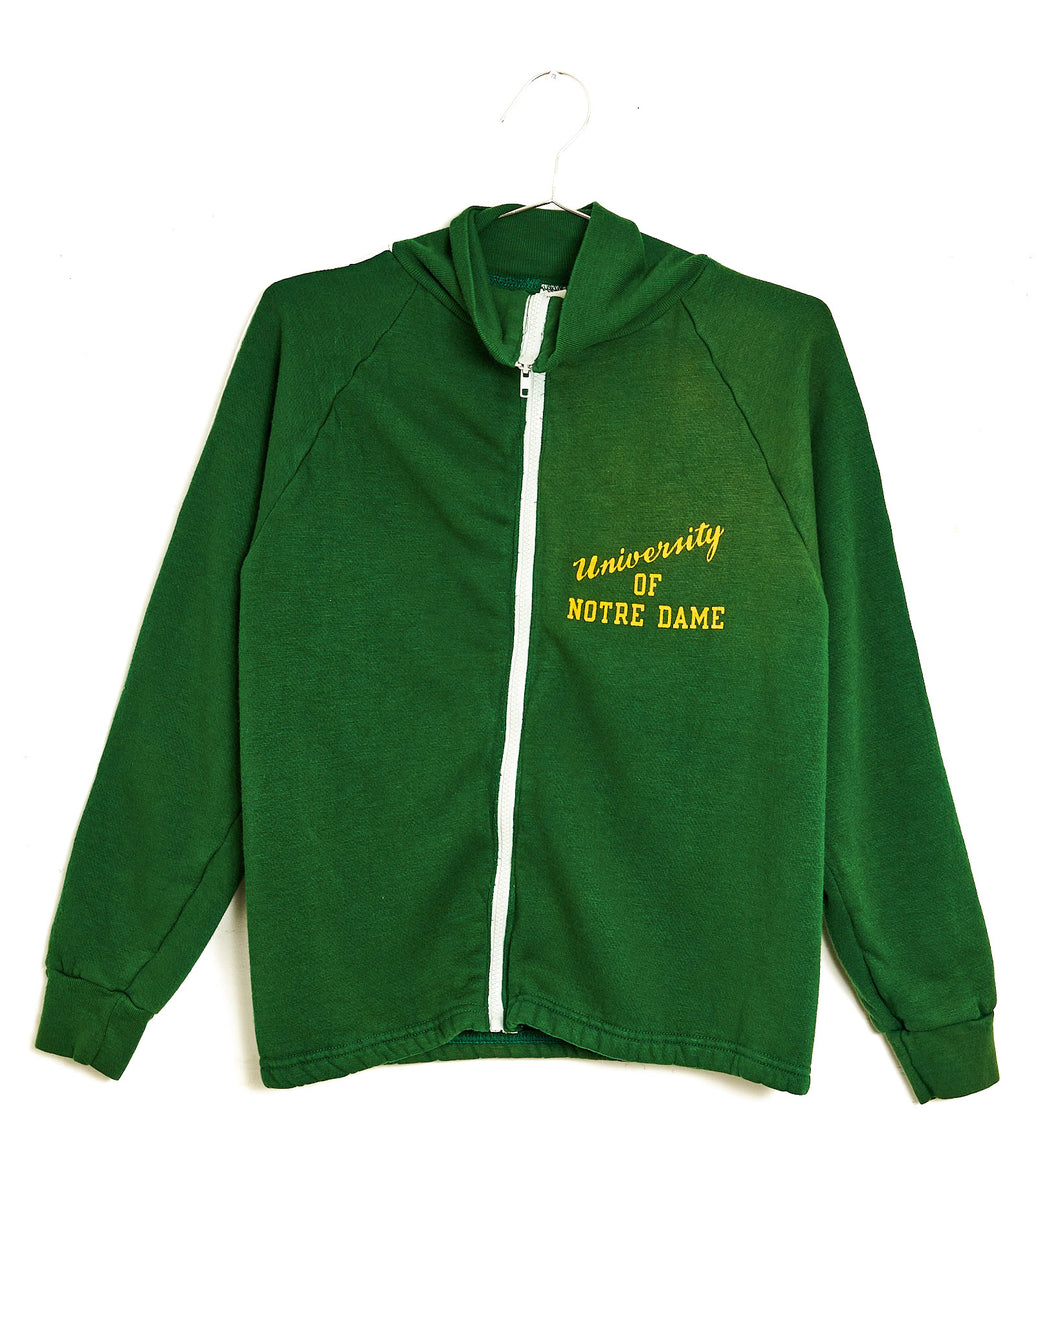 1970s Rare Champion Notre Dame Track Jacket